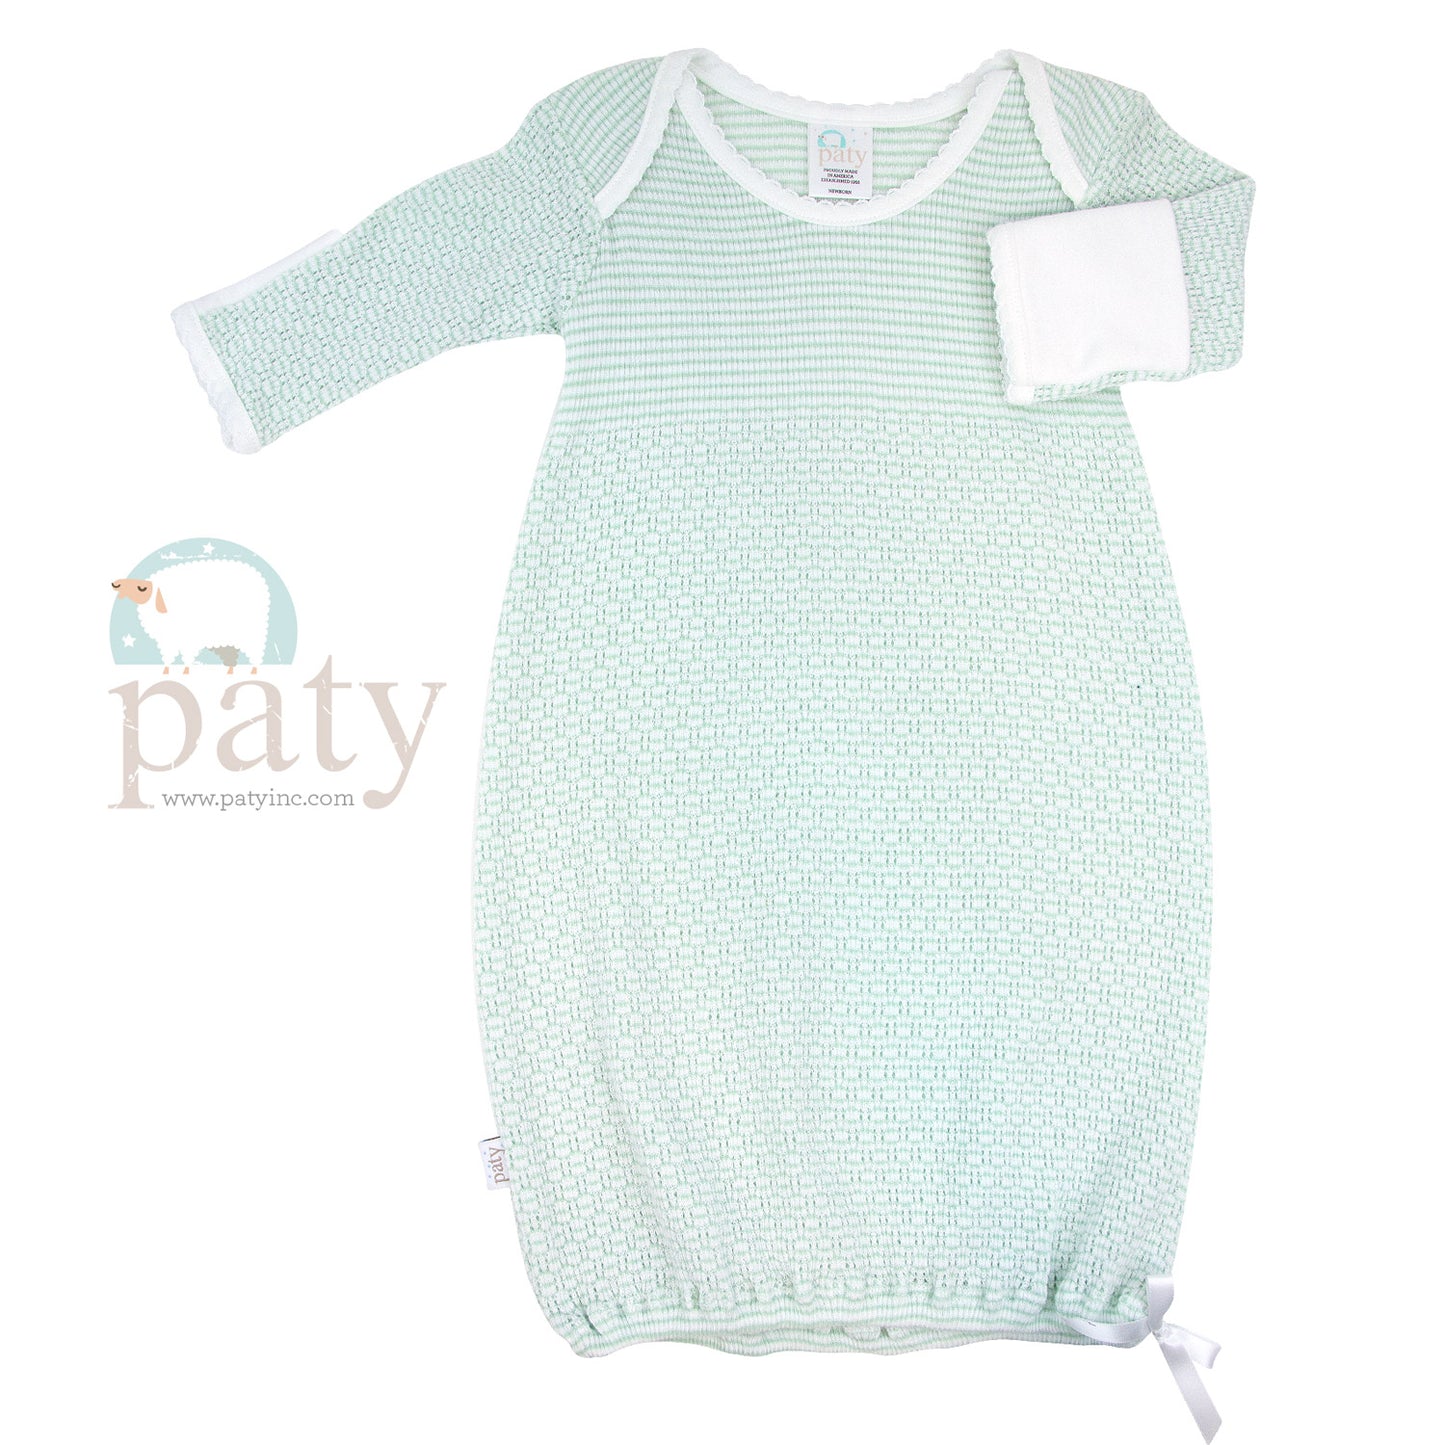 Mint with White Pima Trim Solid Color Paty Knit Lap Shoulder Gown